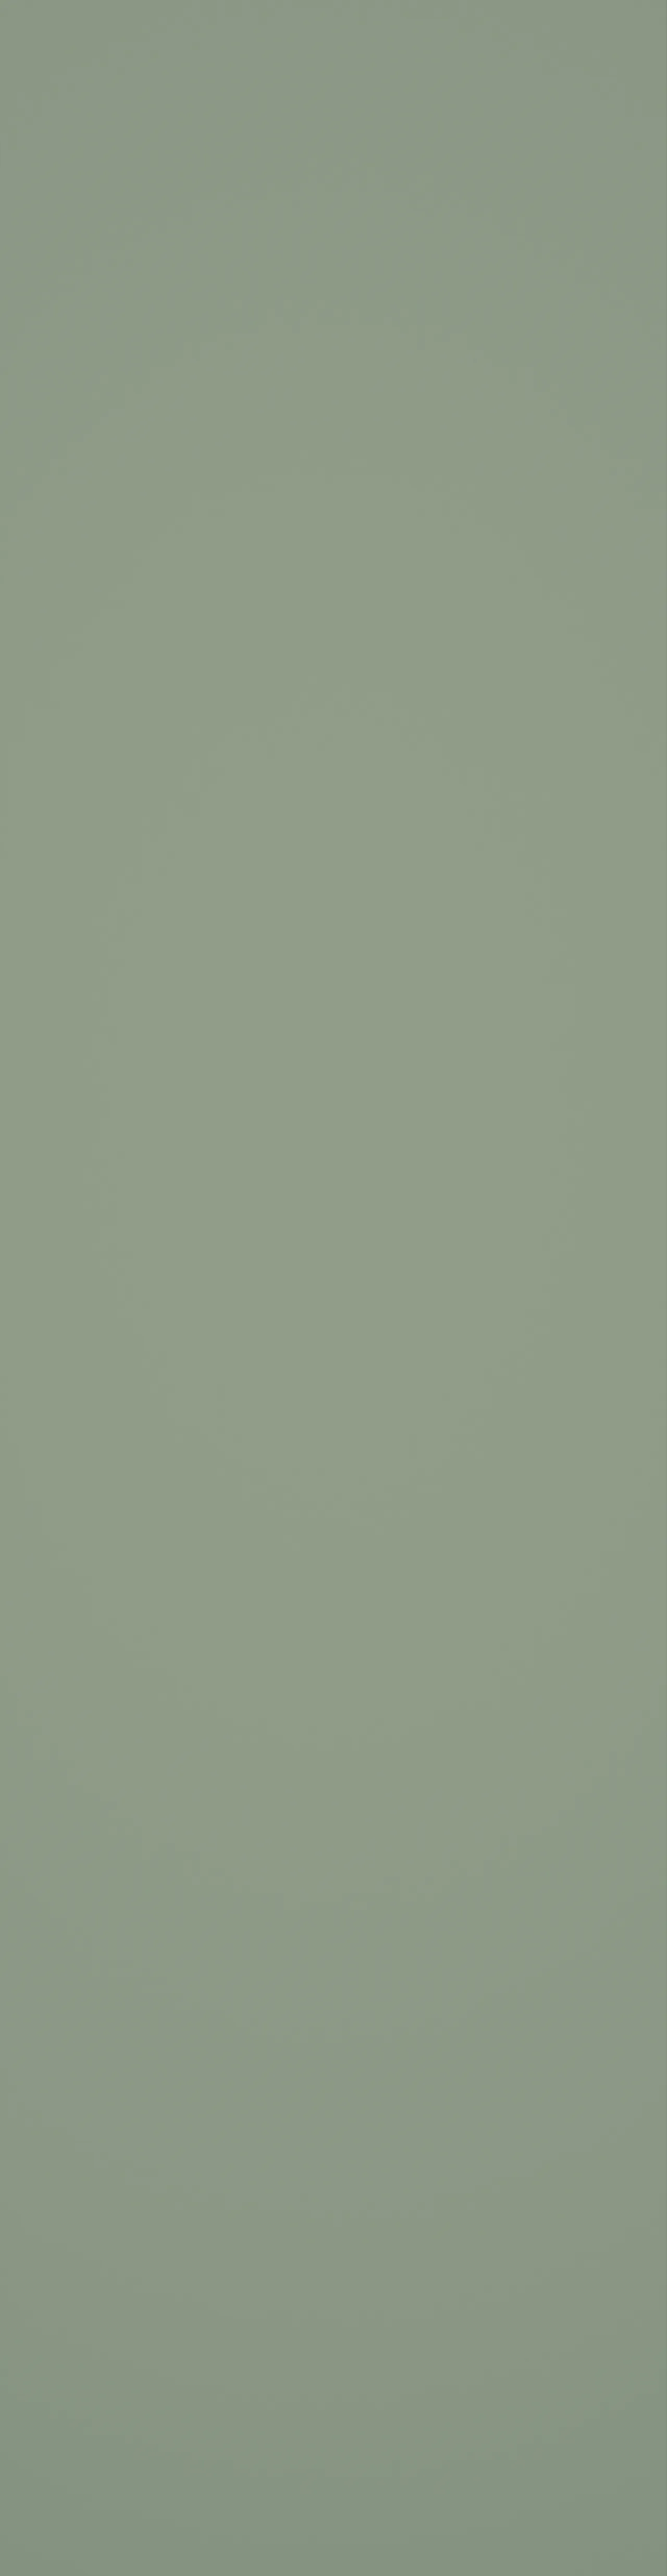 Baderomsp 5206-m00 em olivegreen colour col 11x620x2400 null - null - 1